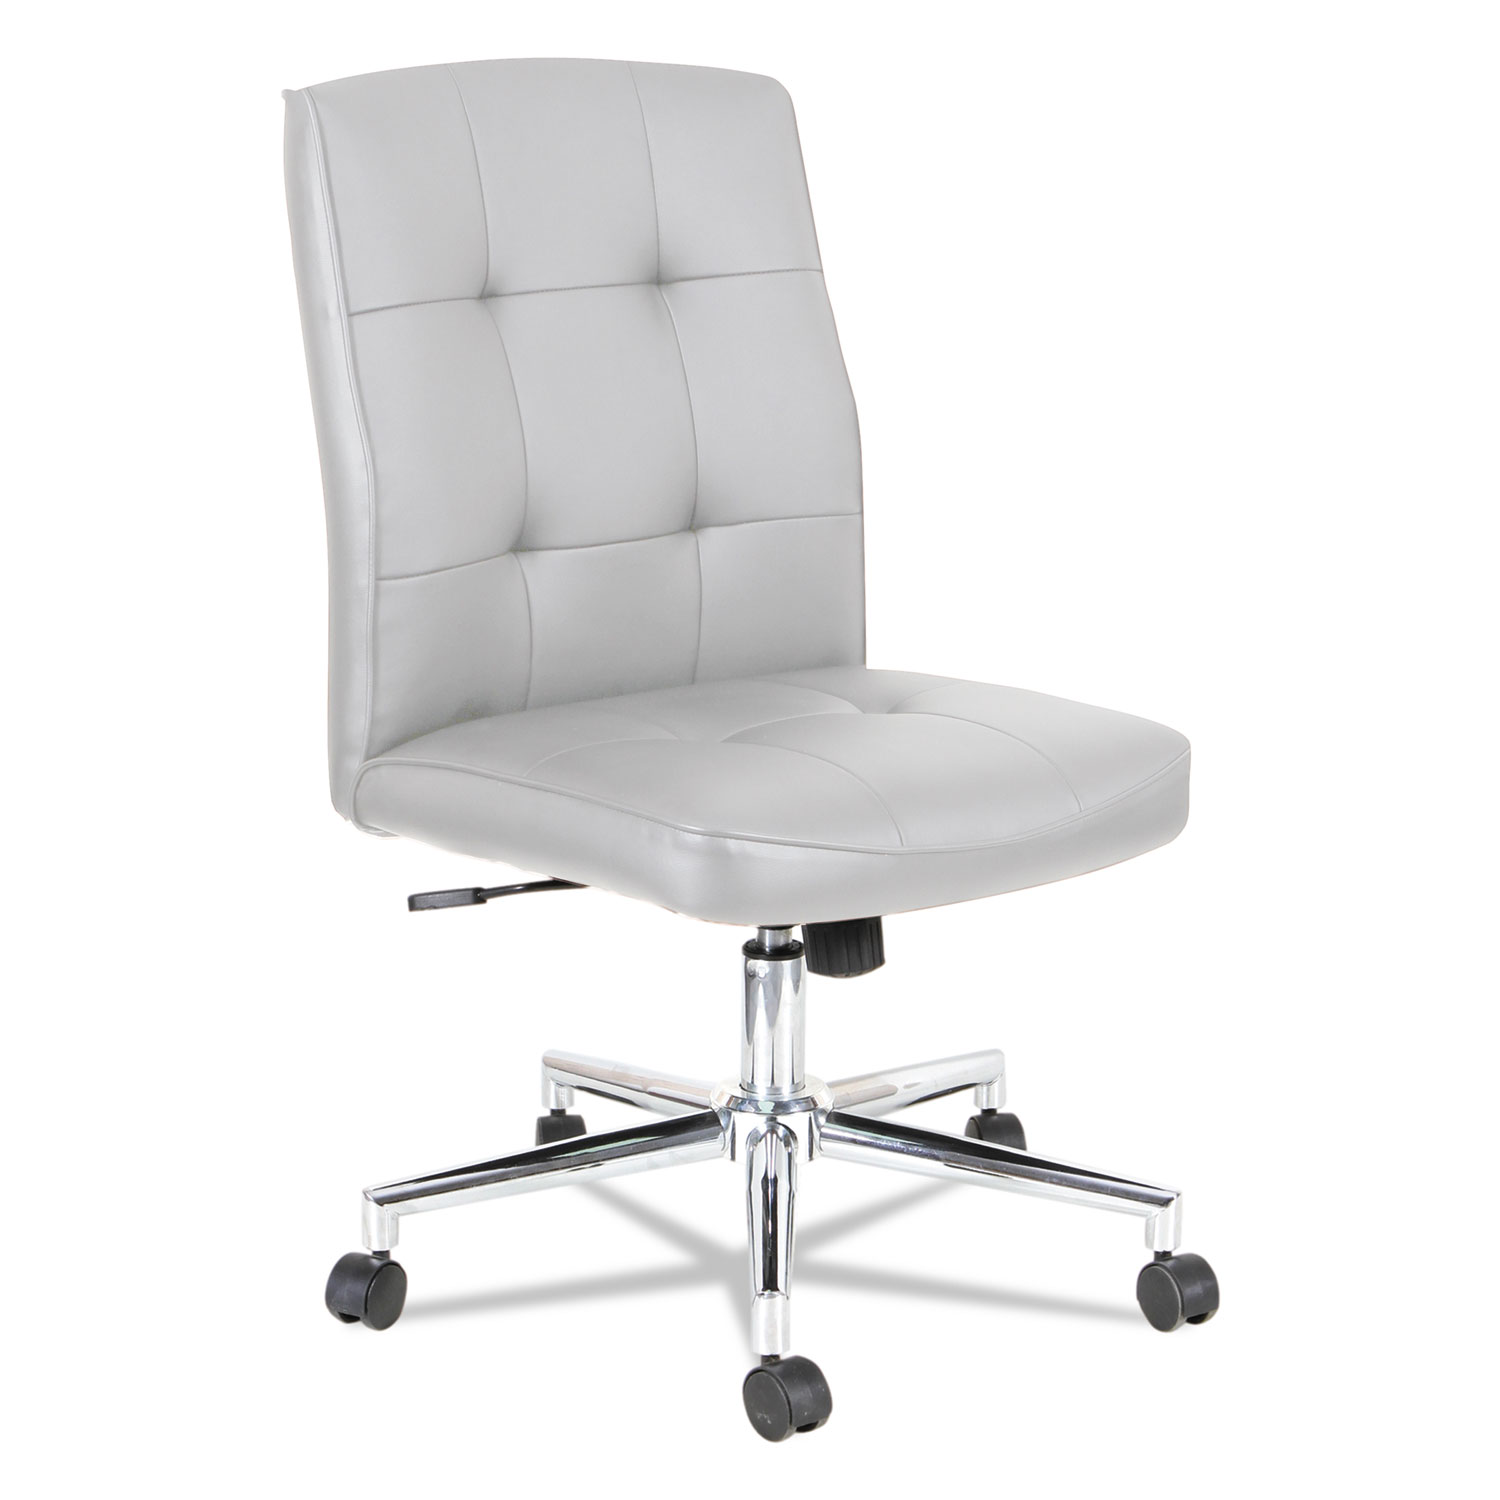 Slimline Swivel/Tilt Task Chair, Supports up to 275 lbs., White Seat/White Back, Chrome Base